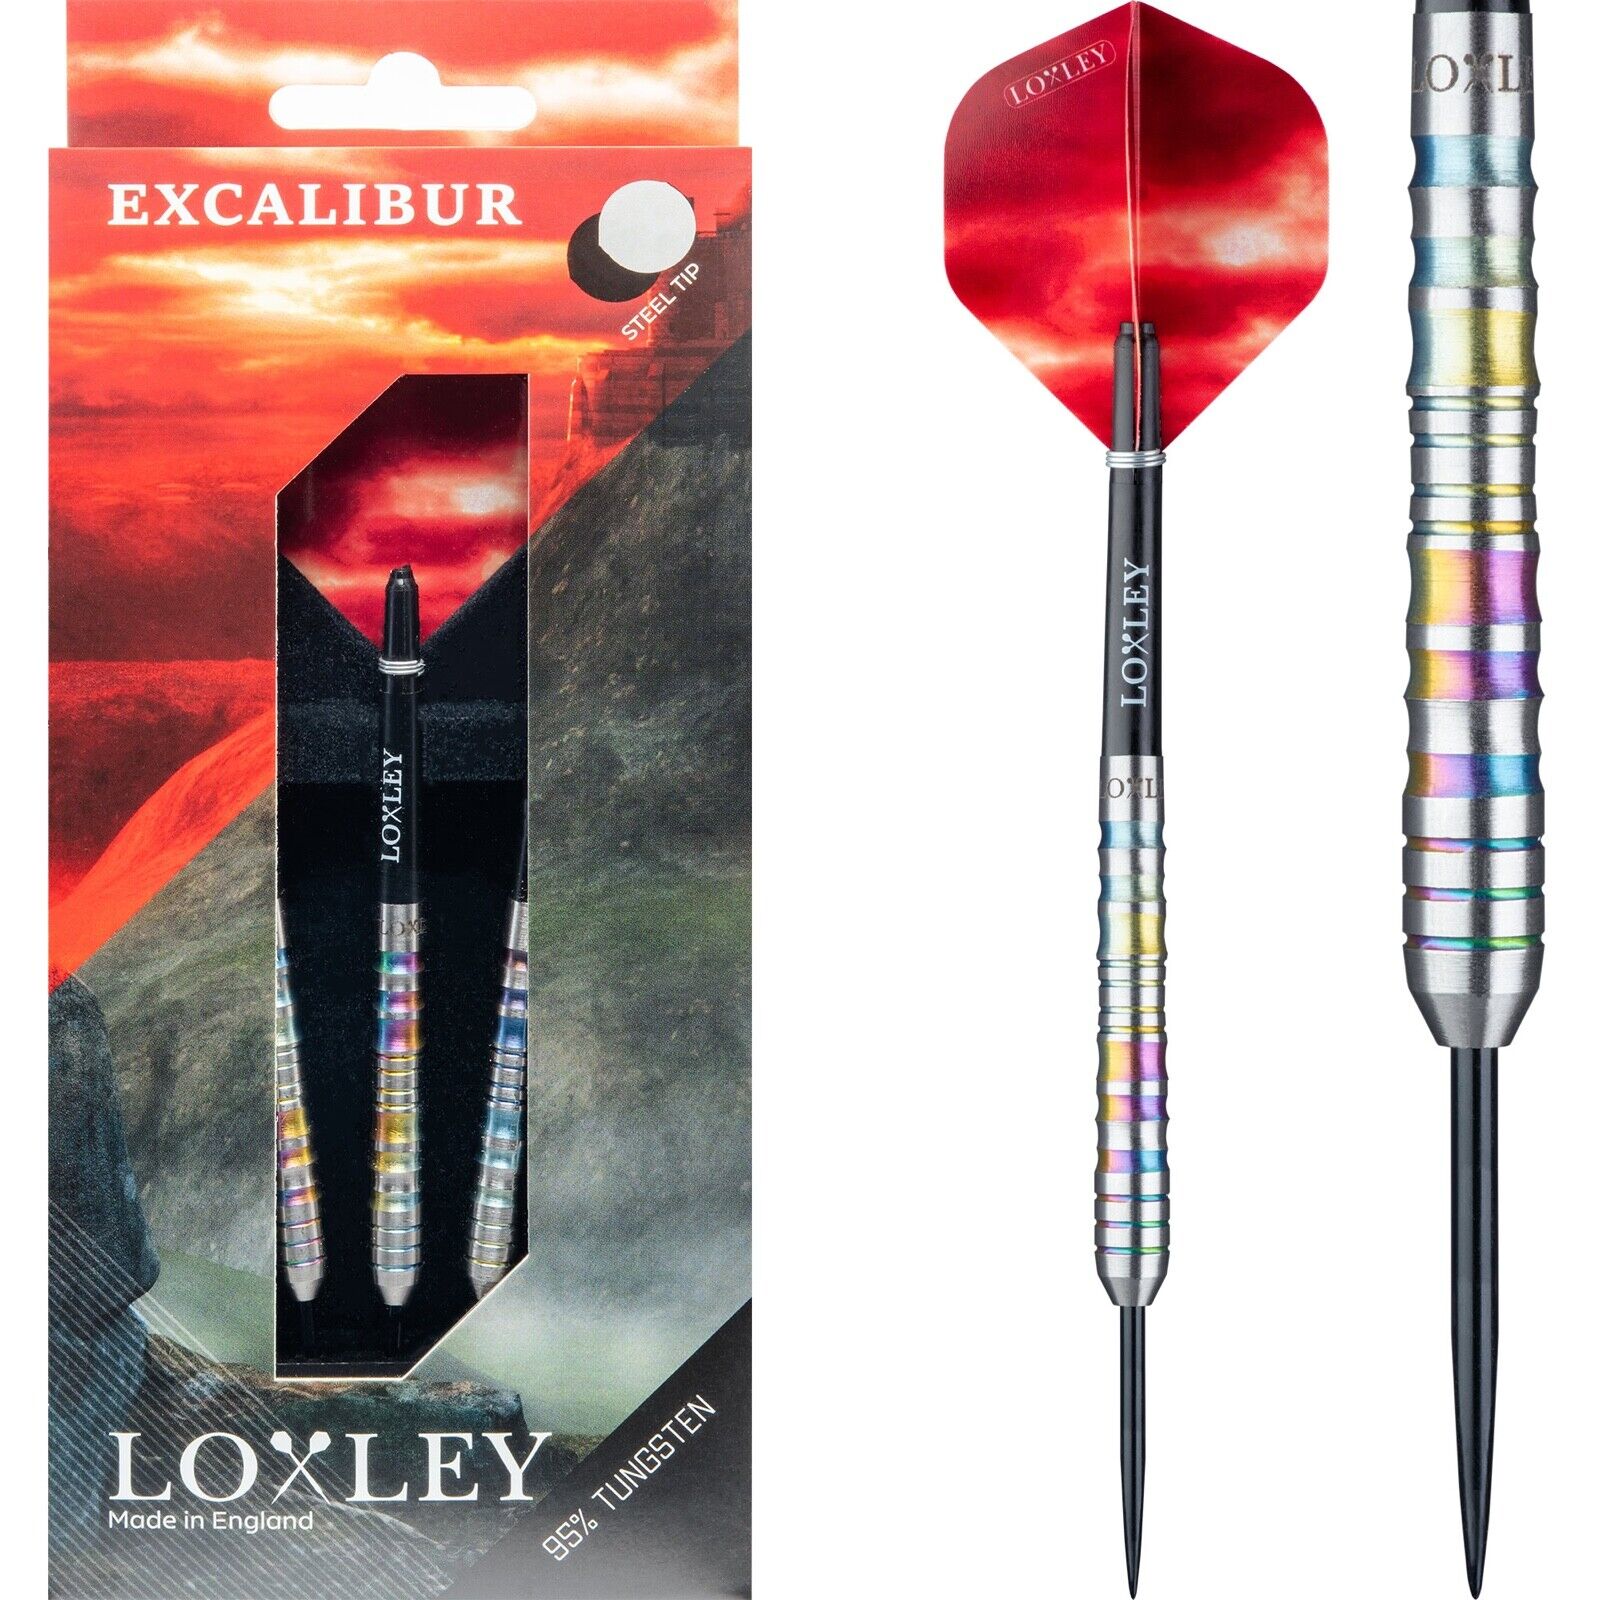 Excalibur darts